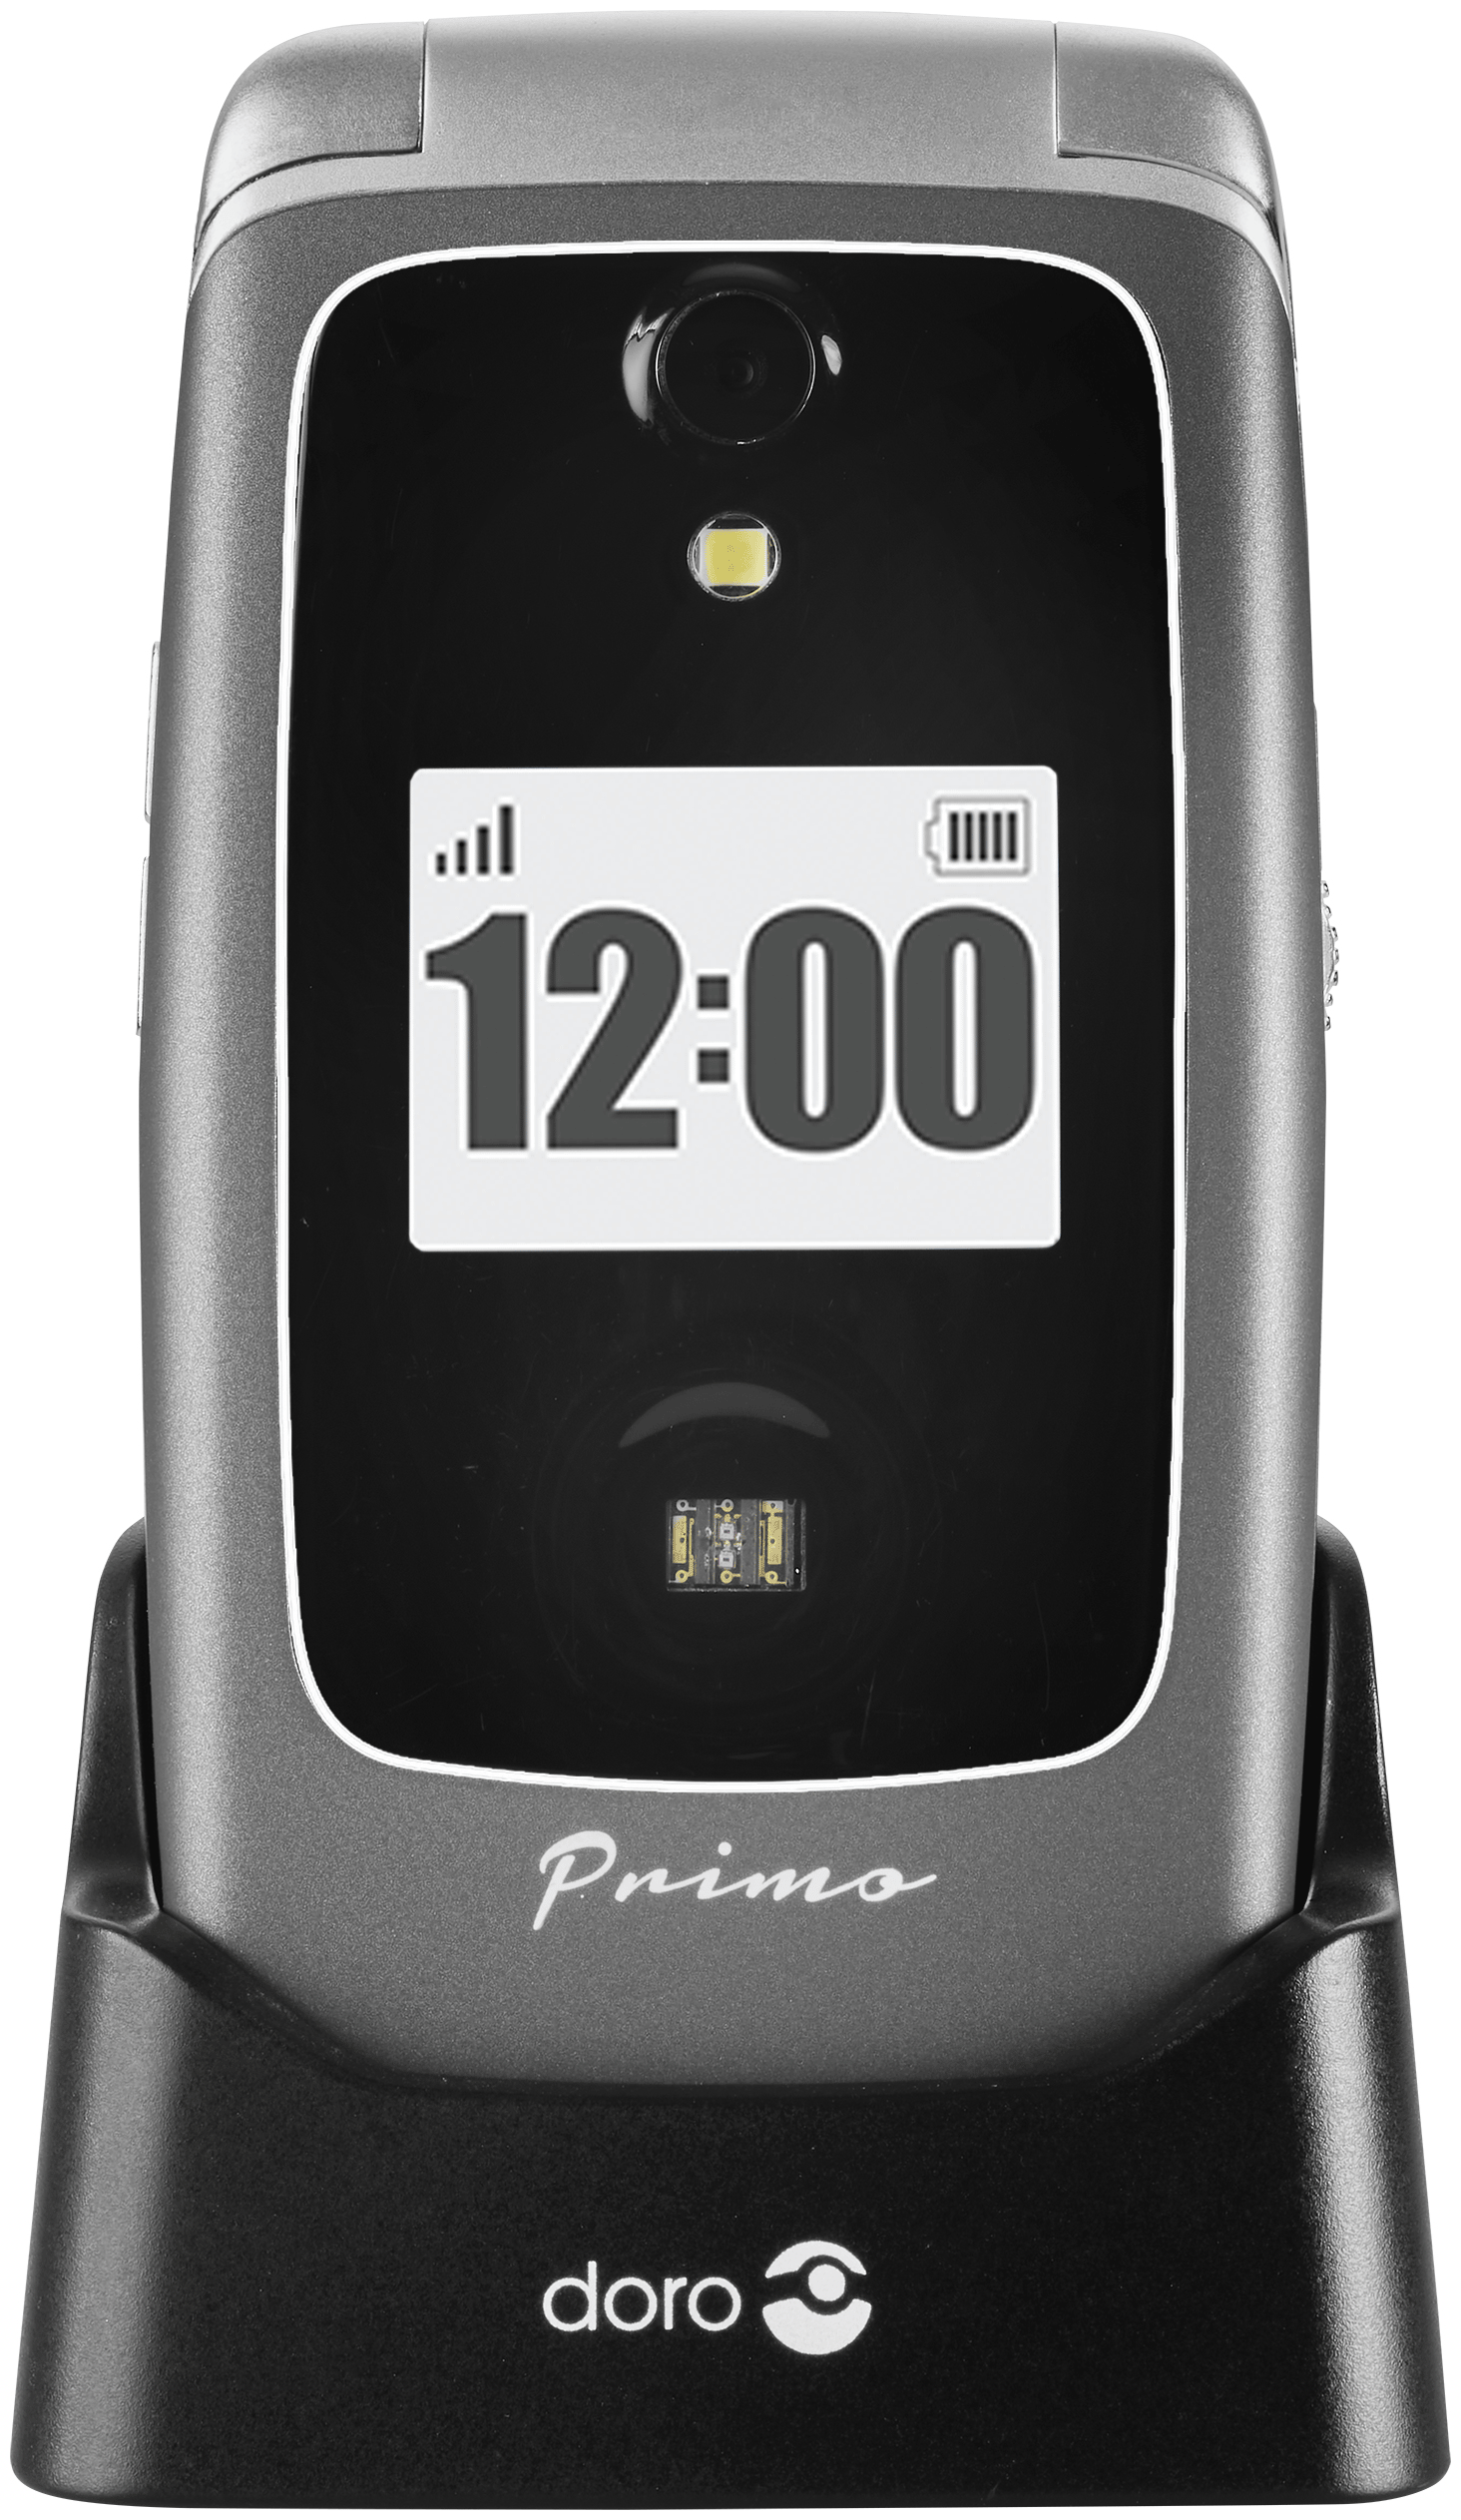 MP 2G von (2.8 7,11 Technomarkt cm Zoll) Primo 418 Smartphone Doro 3 (Graphit) expert